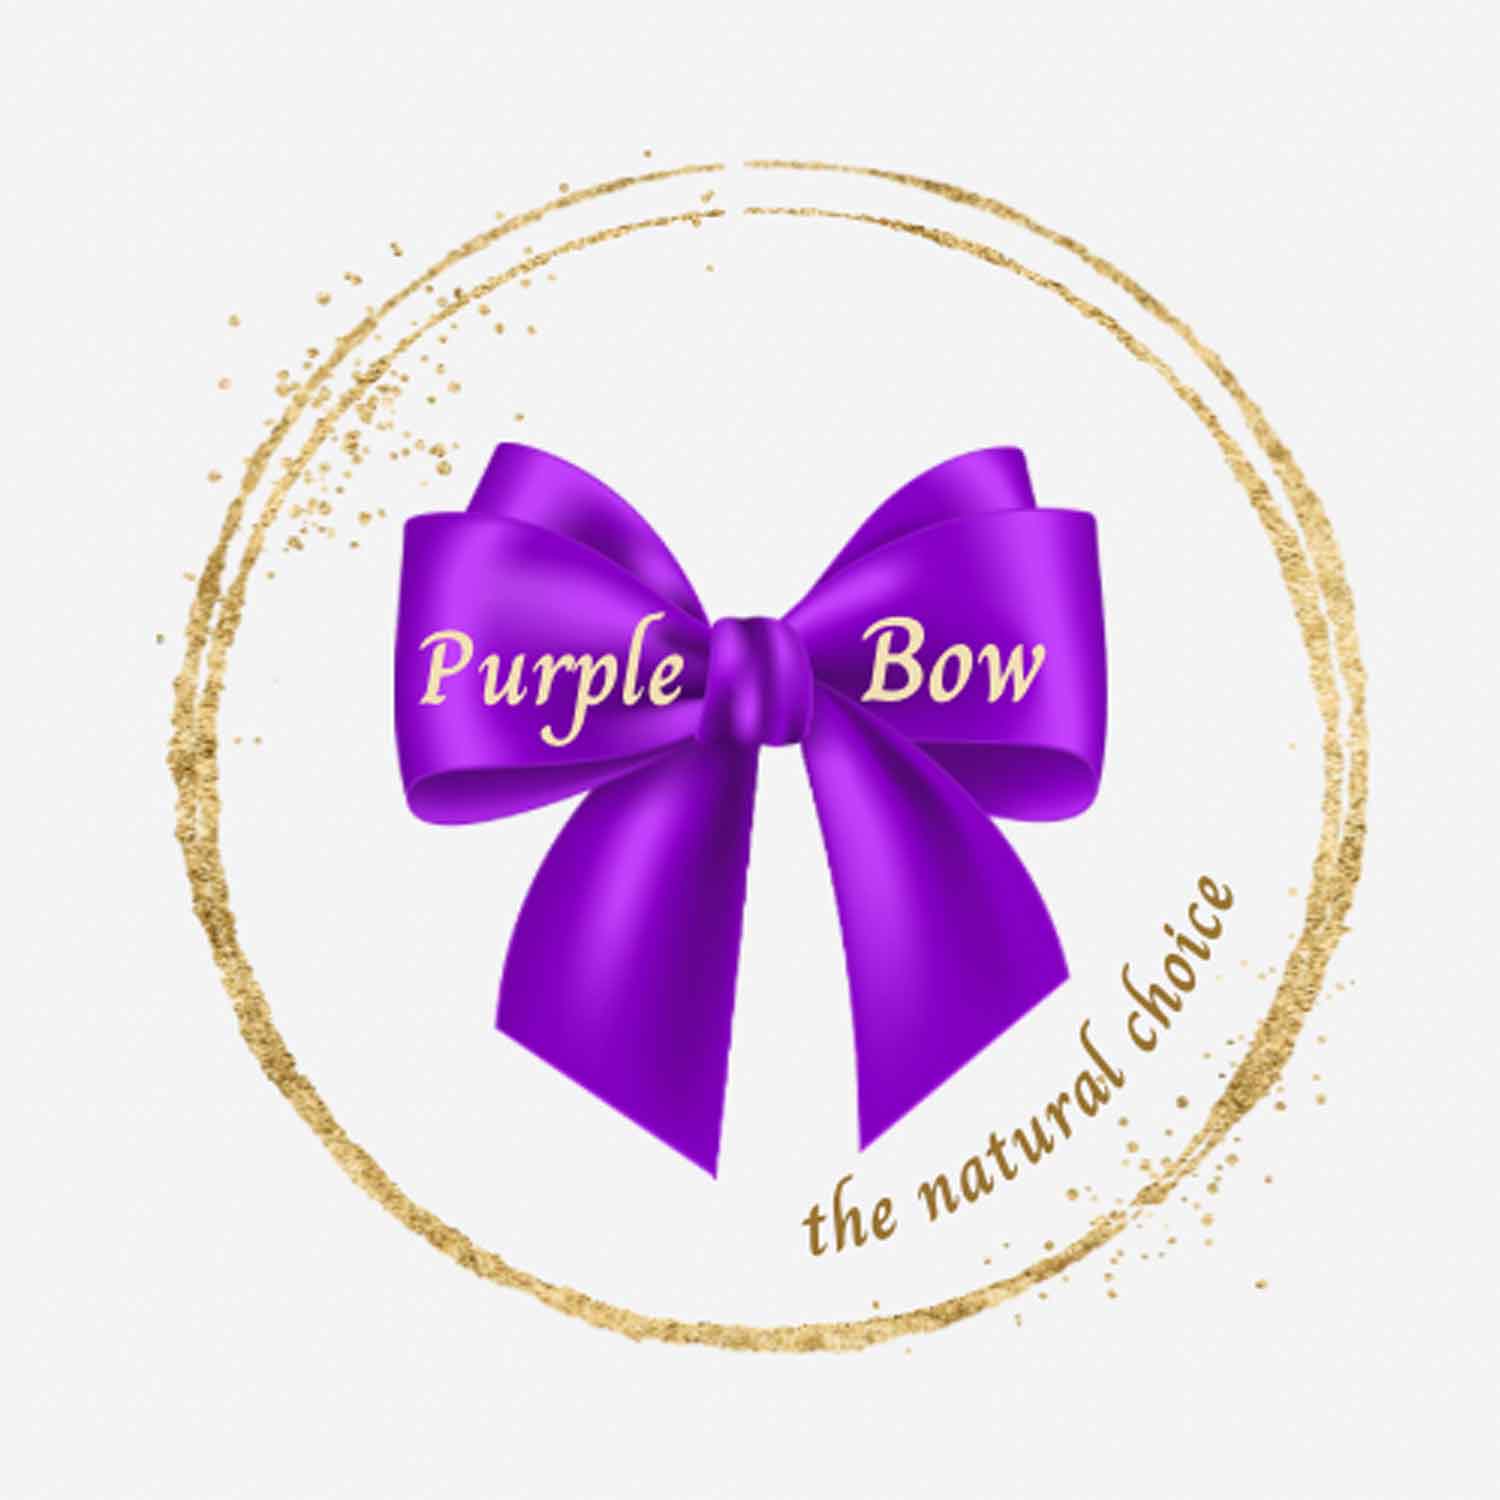 Purple bow cosmetics